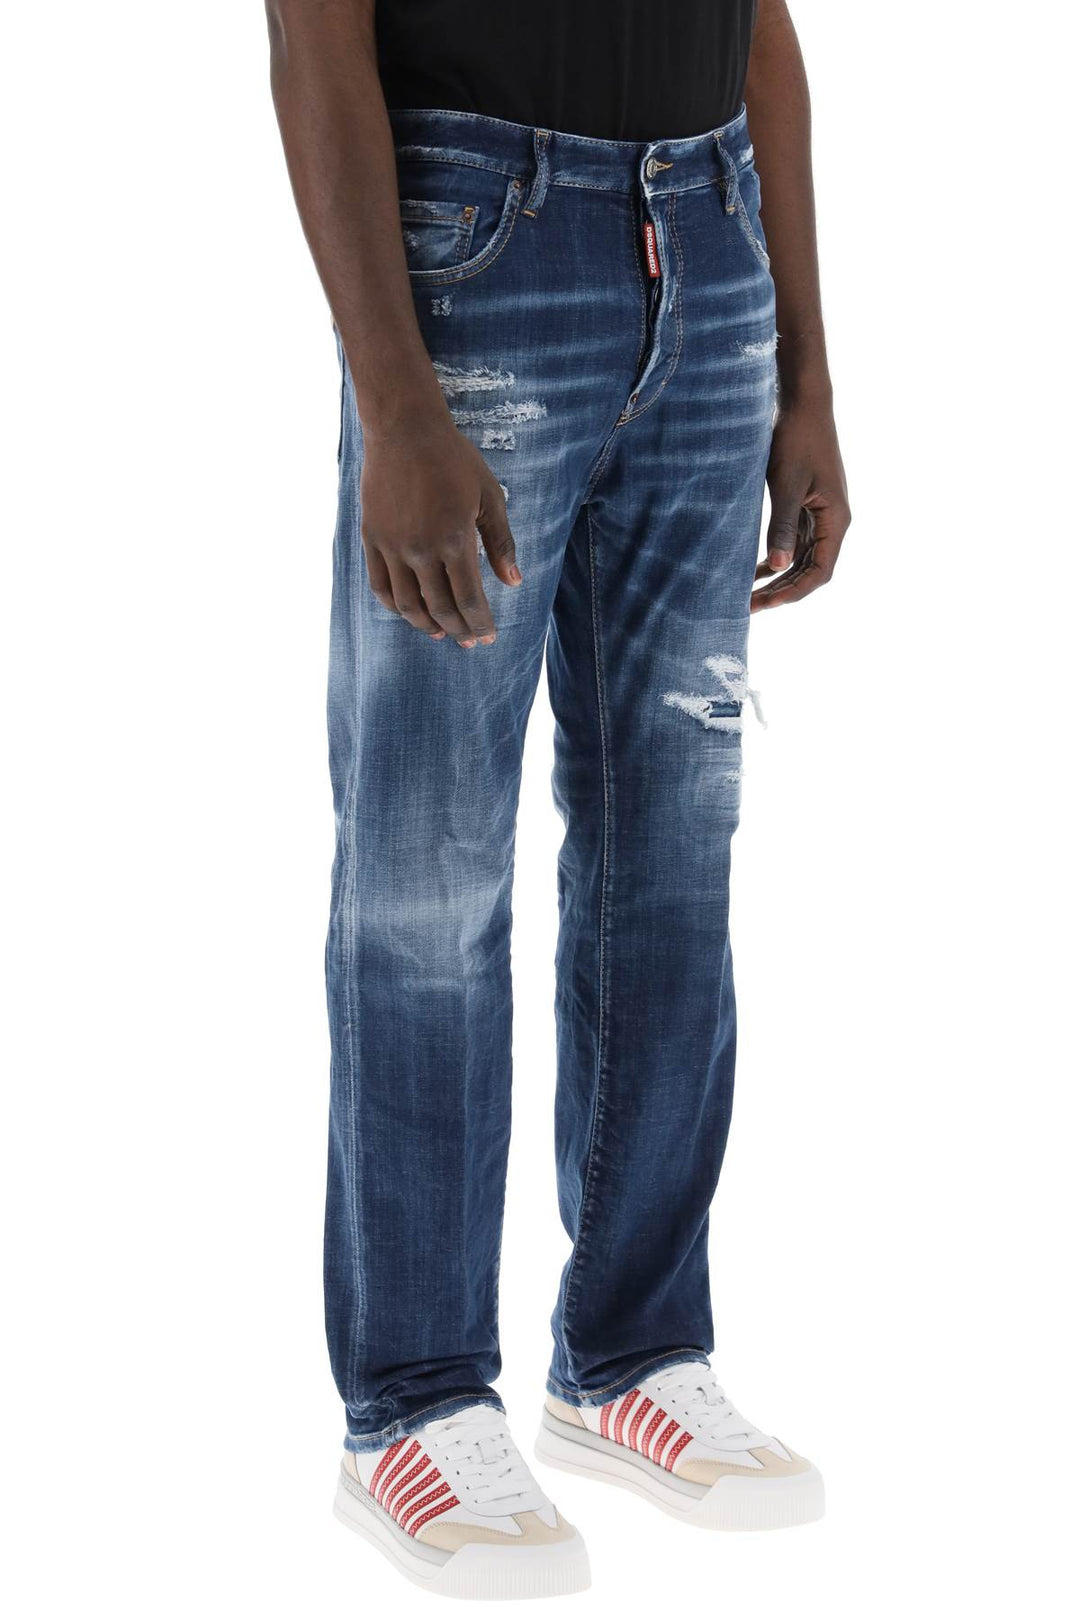 Jeans 642 In Denim Destroyed